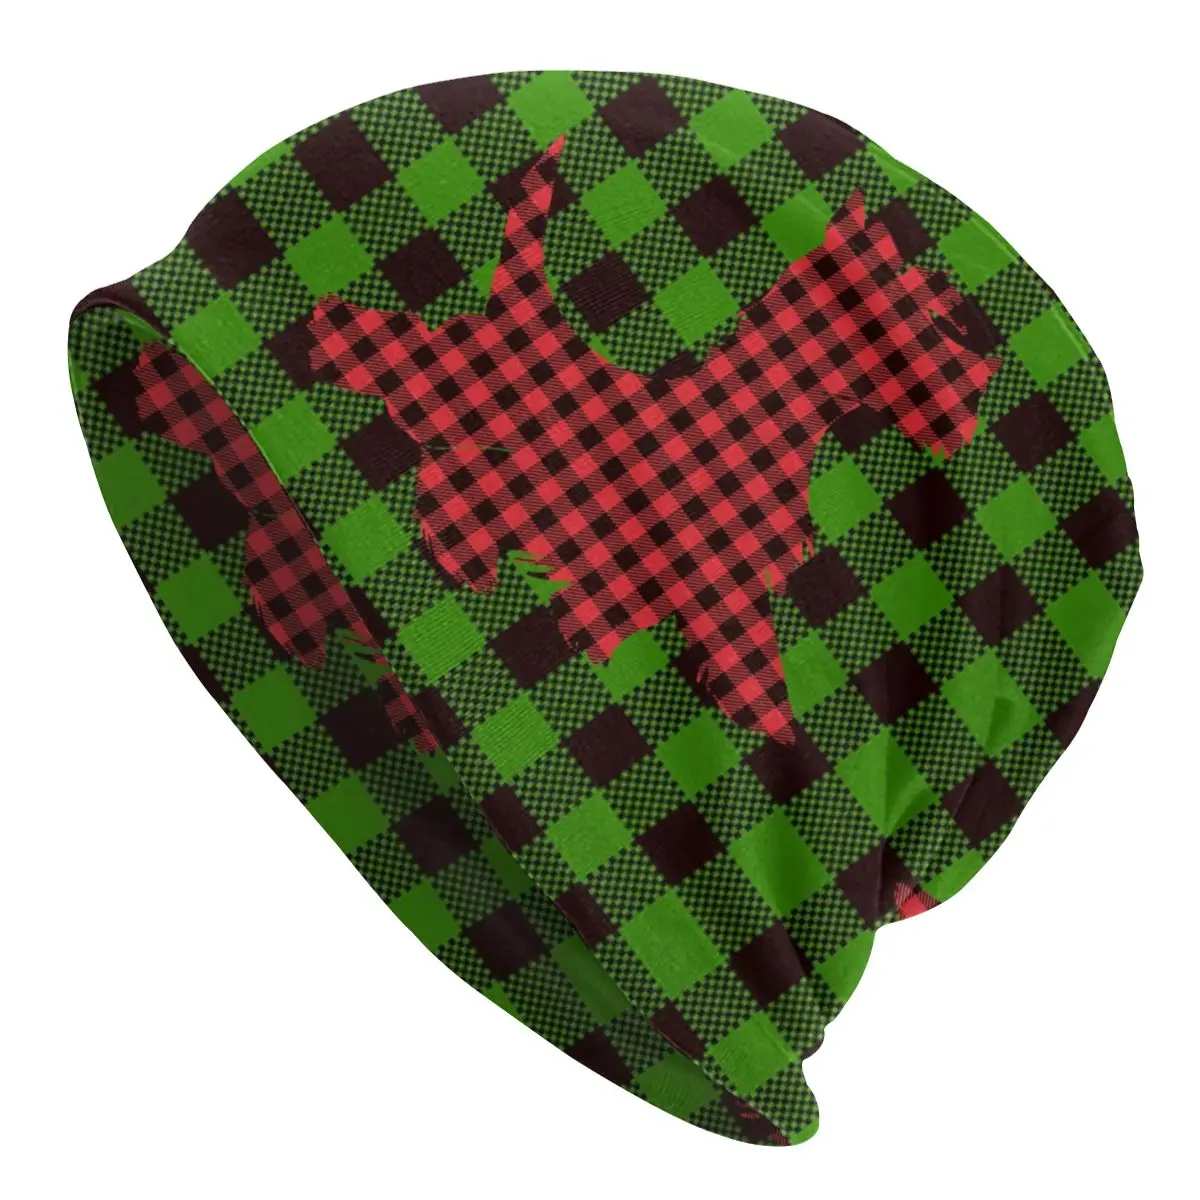 Unisex Bonnet Knitted Hat Christmas Pattern Plaid Scottish Terrier Dog Skullies Beanies Cap Adult Scottie Pet Beanie Hat Ski Cap